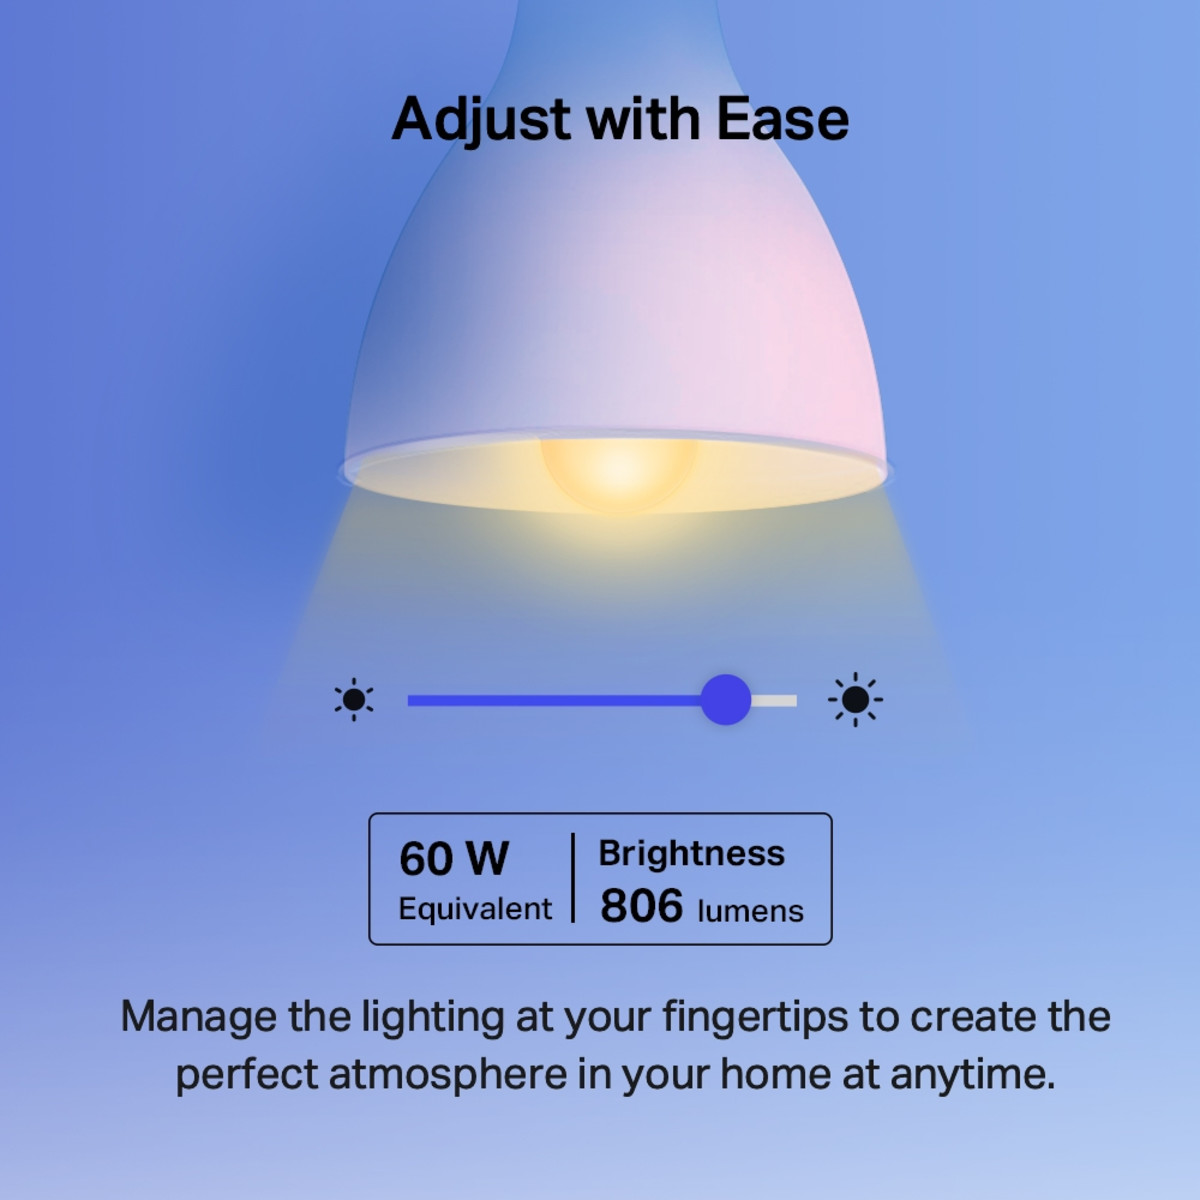 Tapo Smart Wi-Fi Light Bulb Multicolor